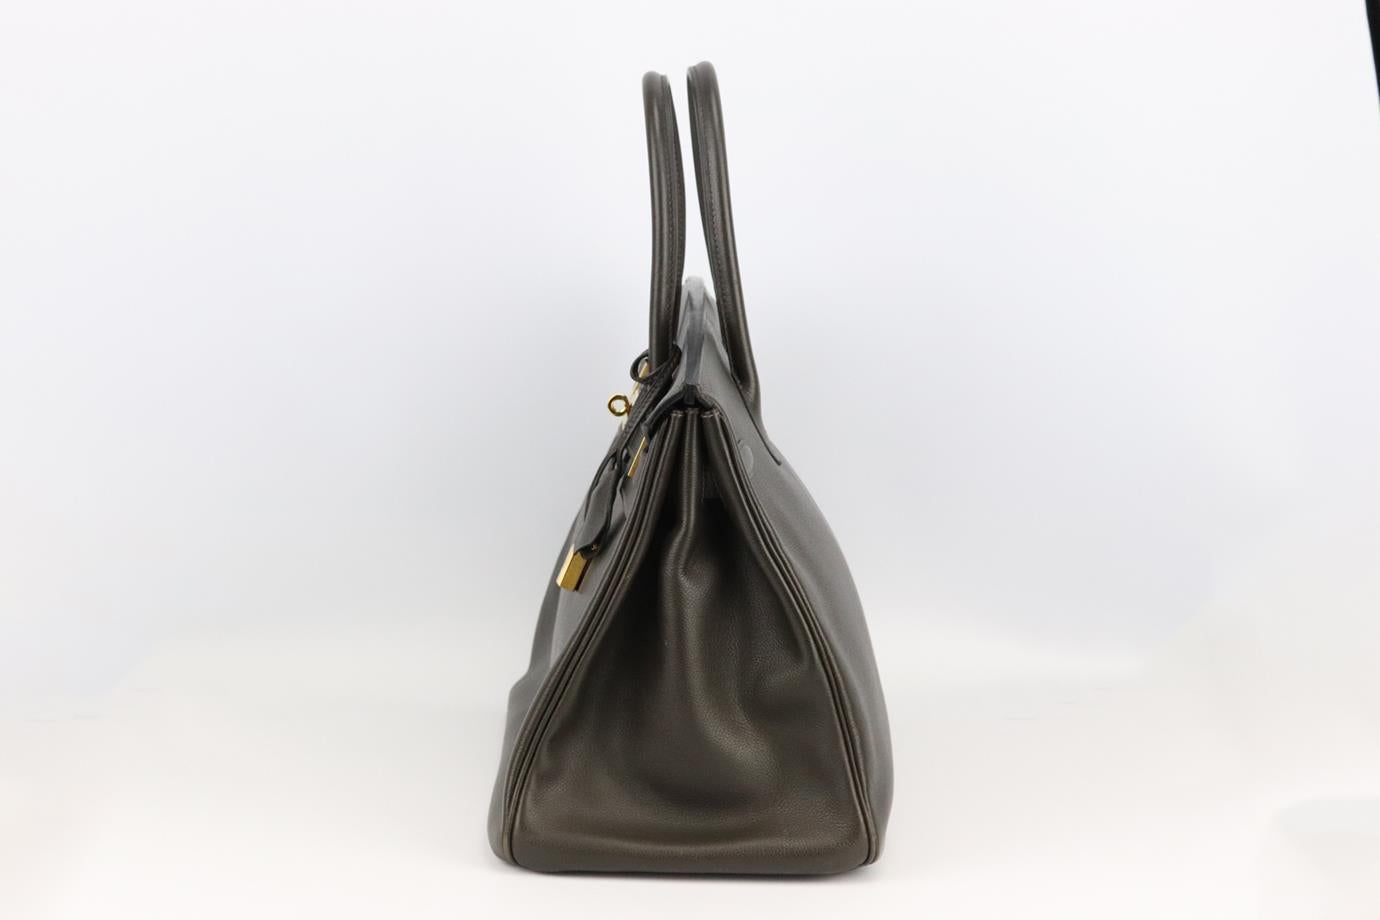 Hermès 2010 Birkin 35cm Evergrain Leather Bag In Good Condition In London, GB